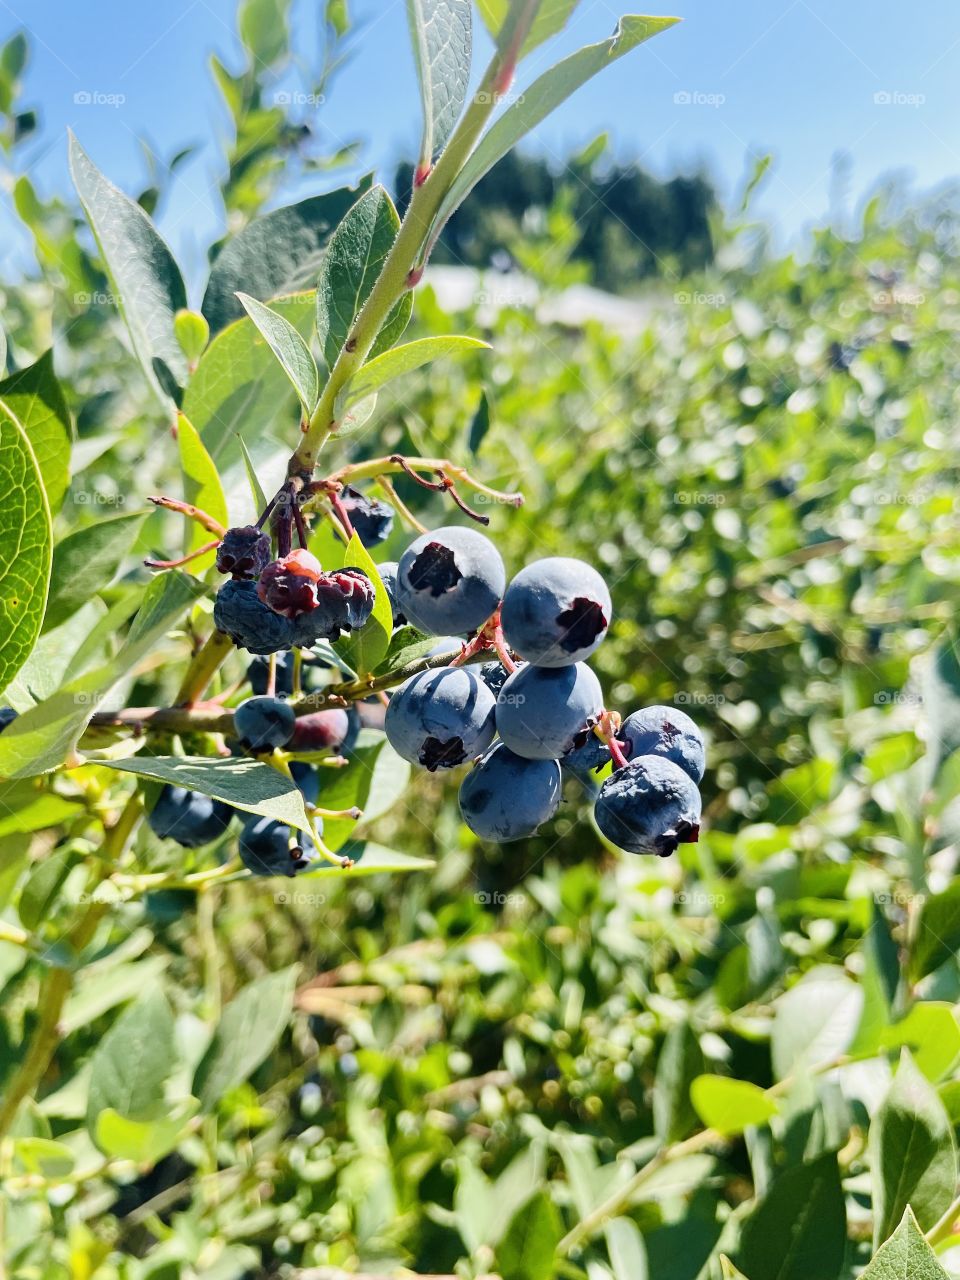 Picking blueberries 